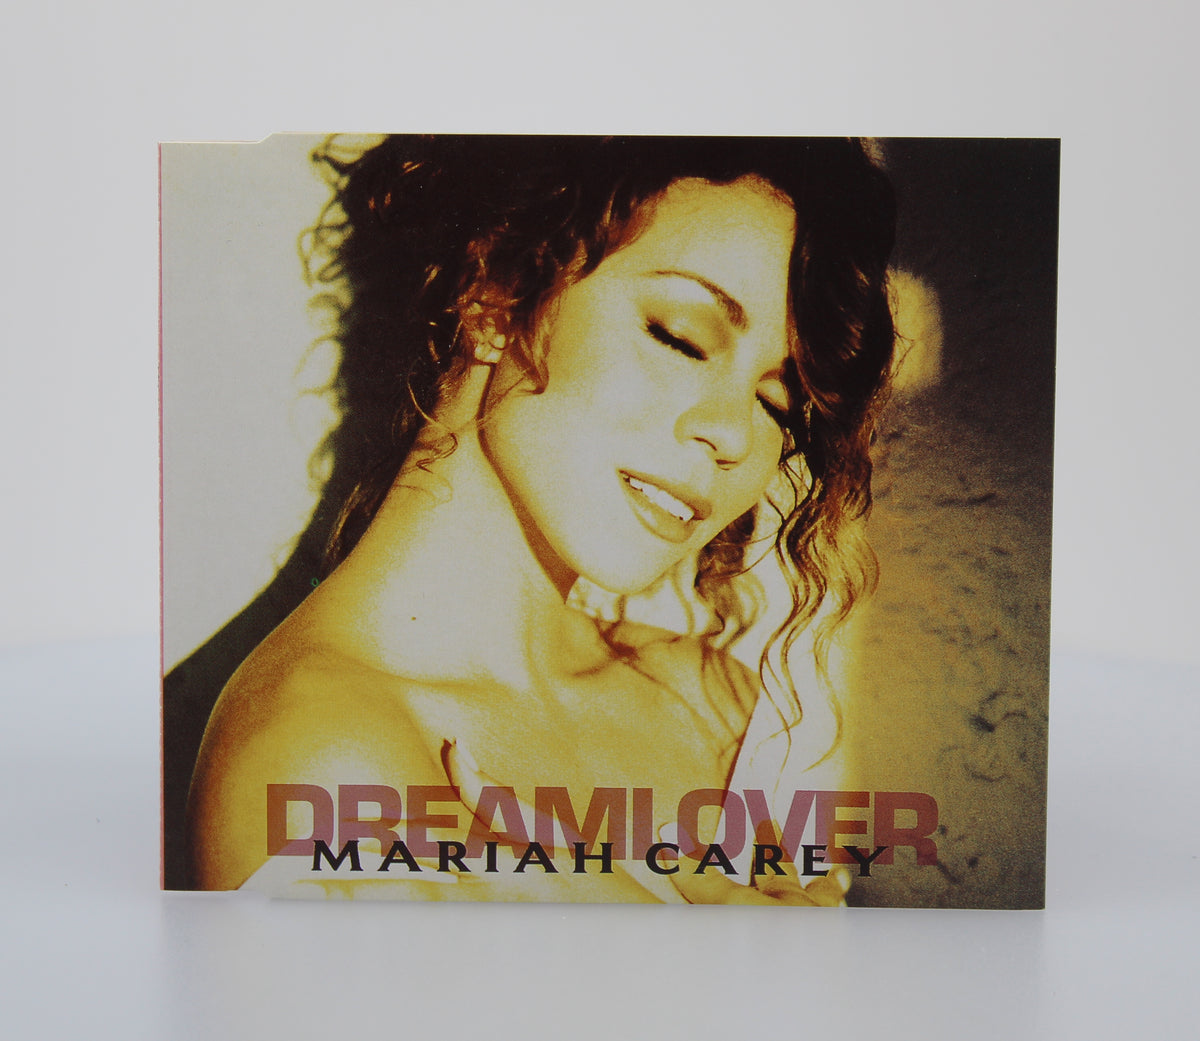 Mariah Carey, Dreamlover, CD Maxi Single, Australia 1993 (CD 656)